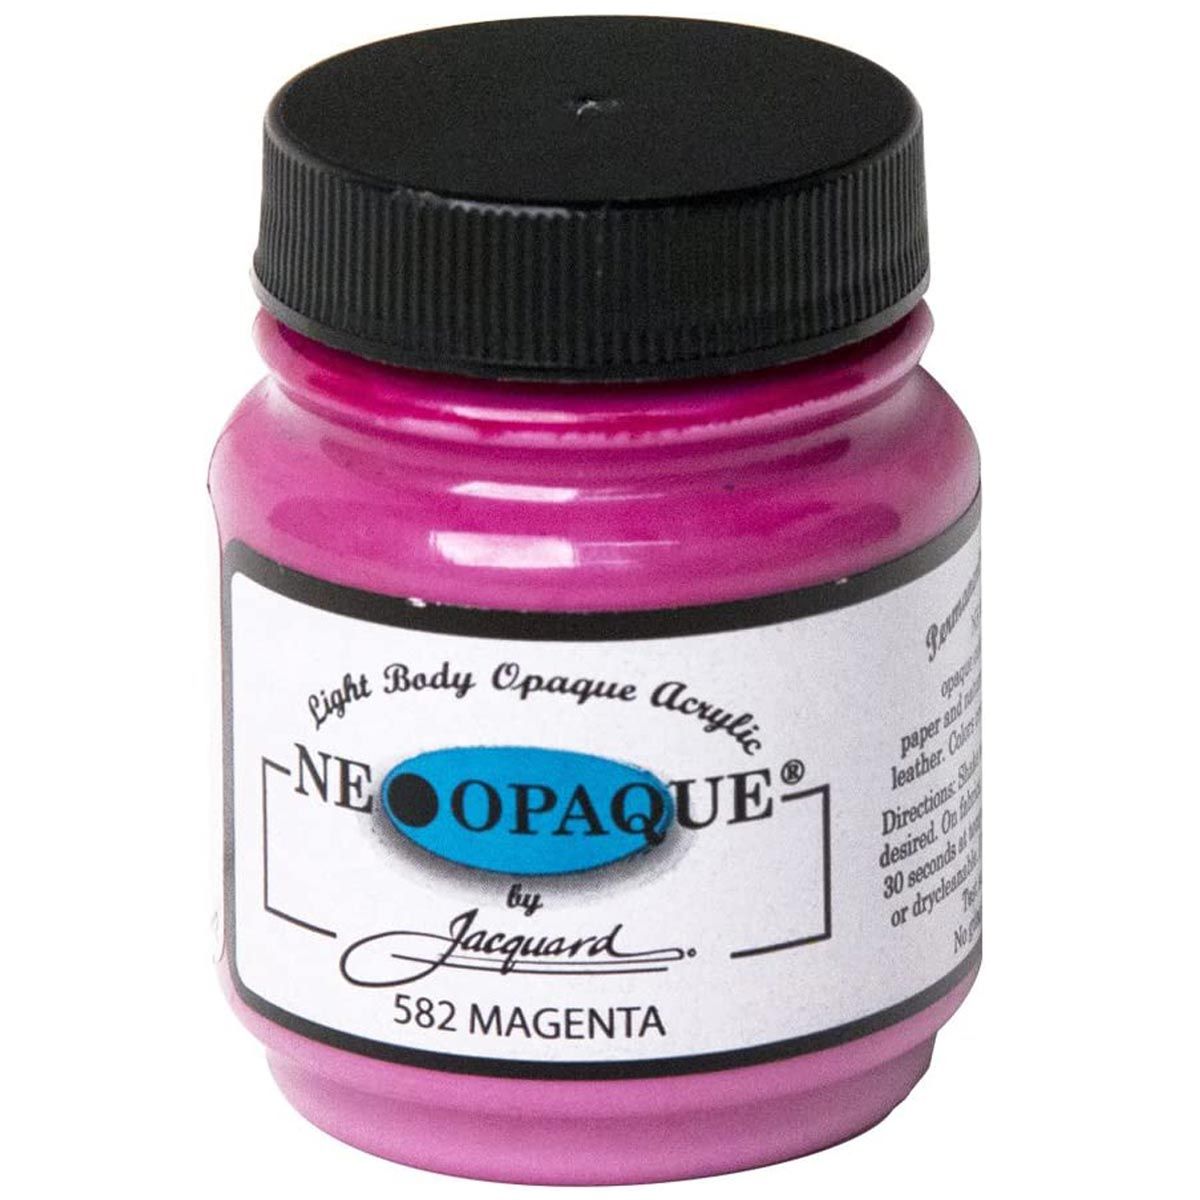 Jacquard Neopaque Acrylic 582 Magenta 2.25 oz